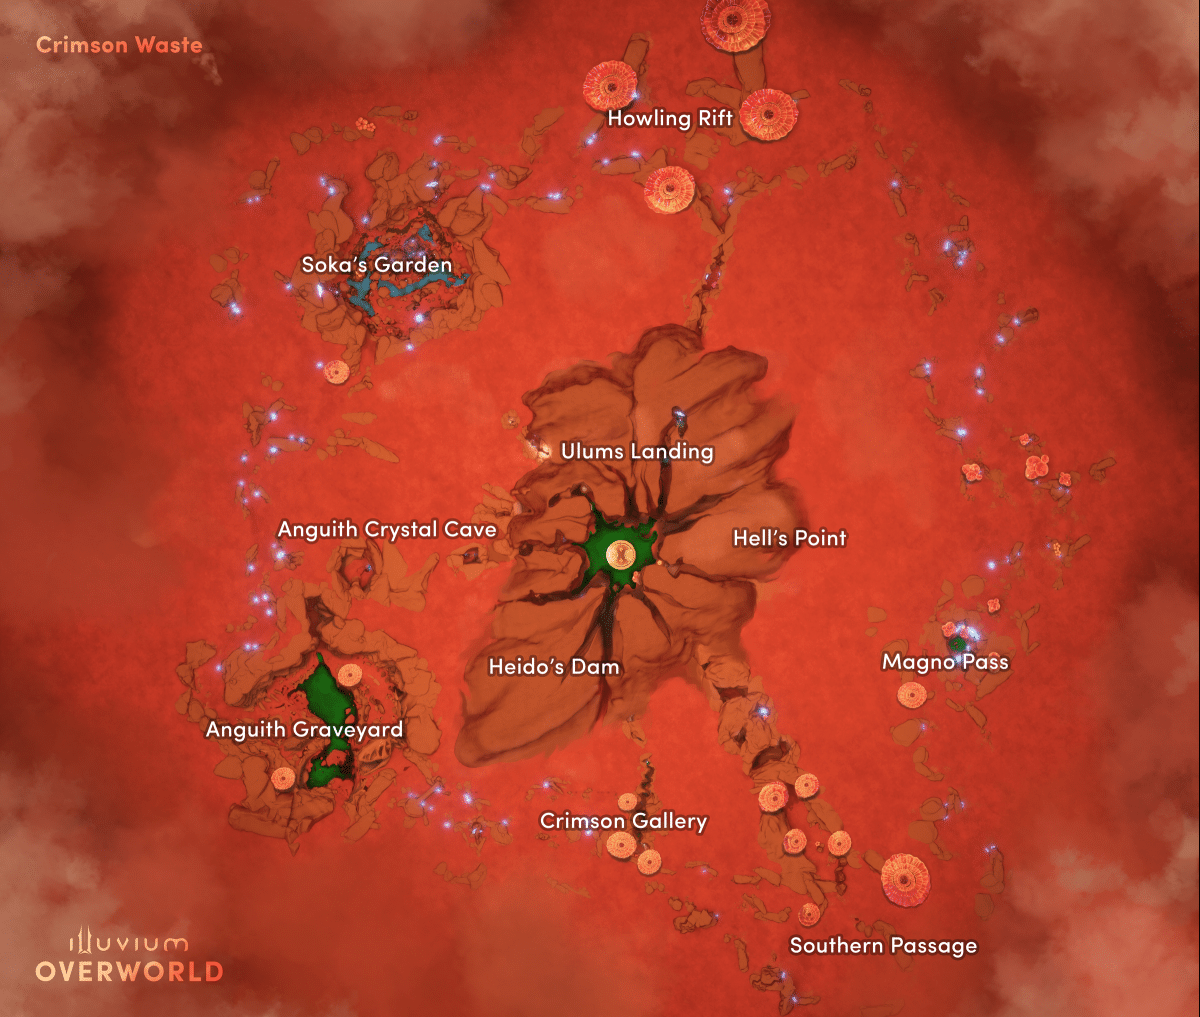 Crimson Waste map from the blockchain game Illuvium